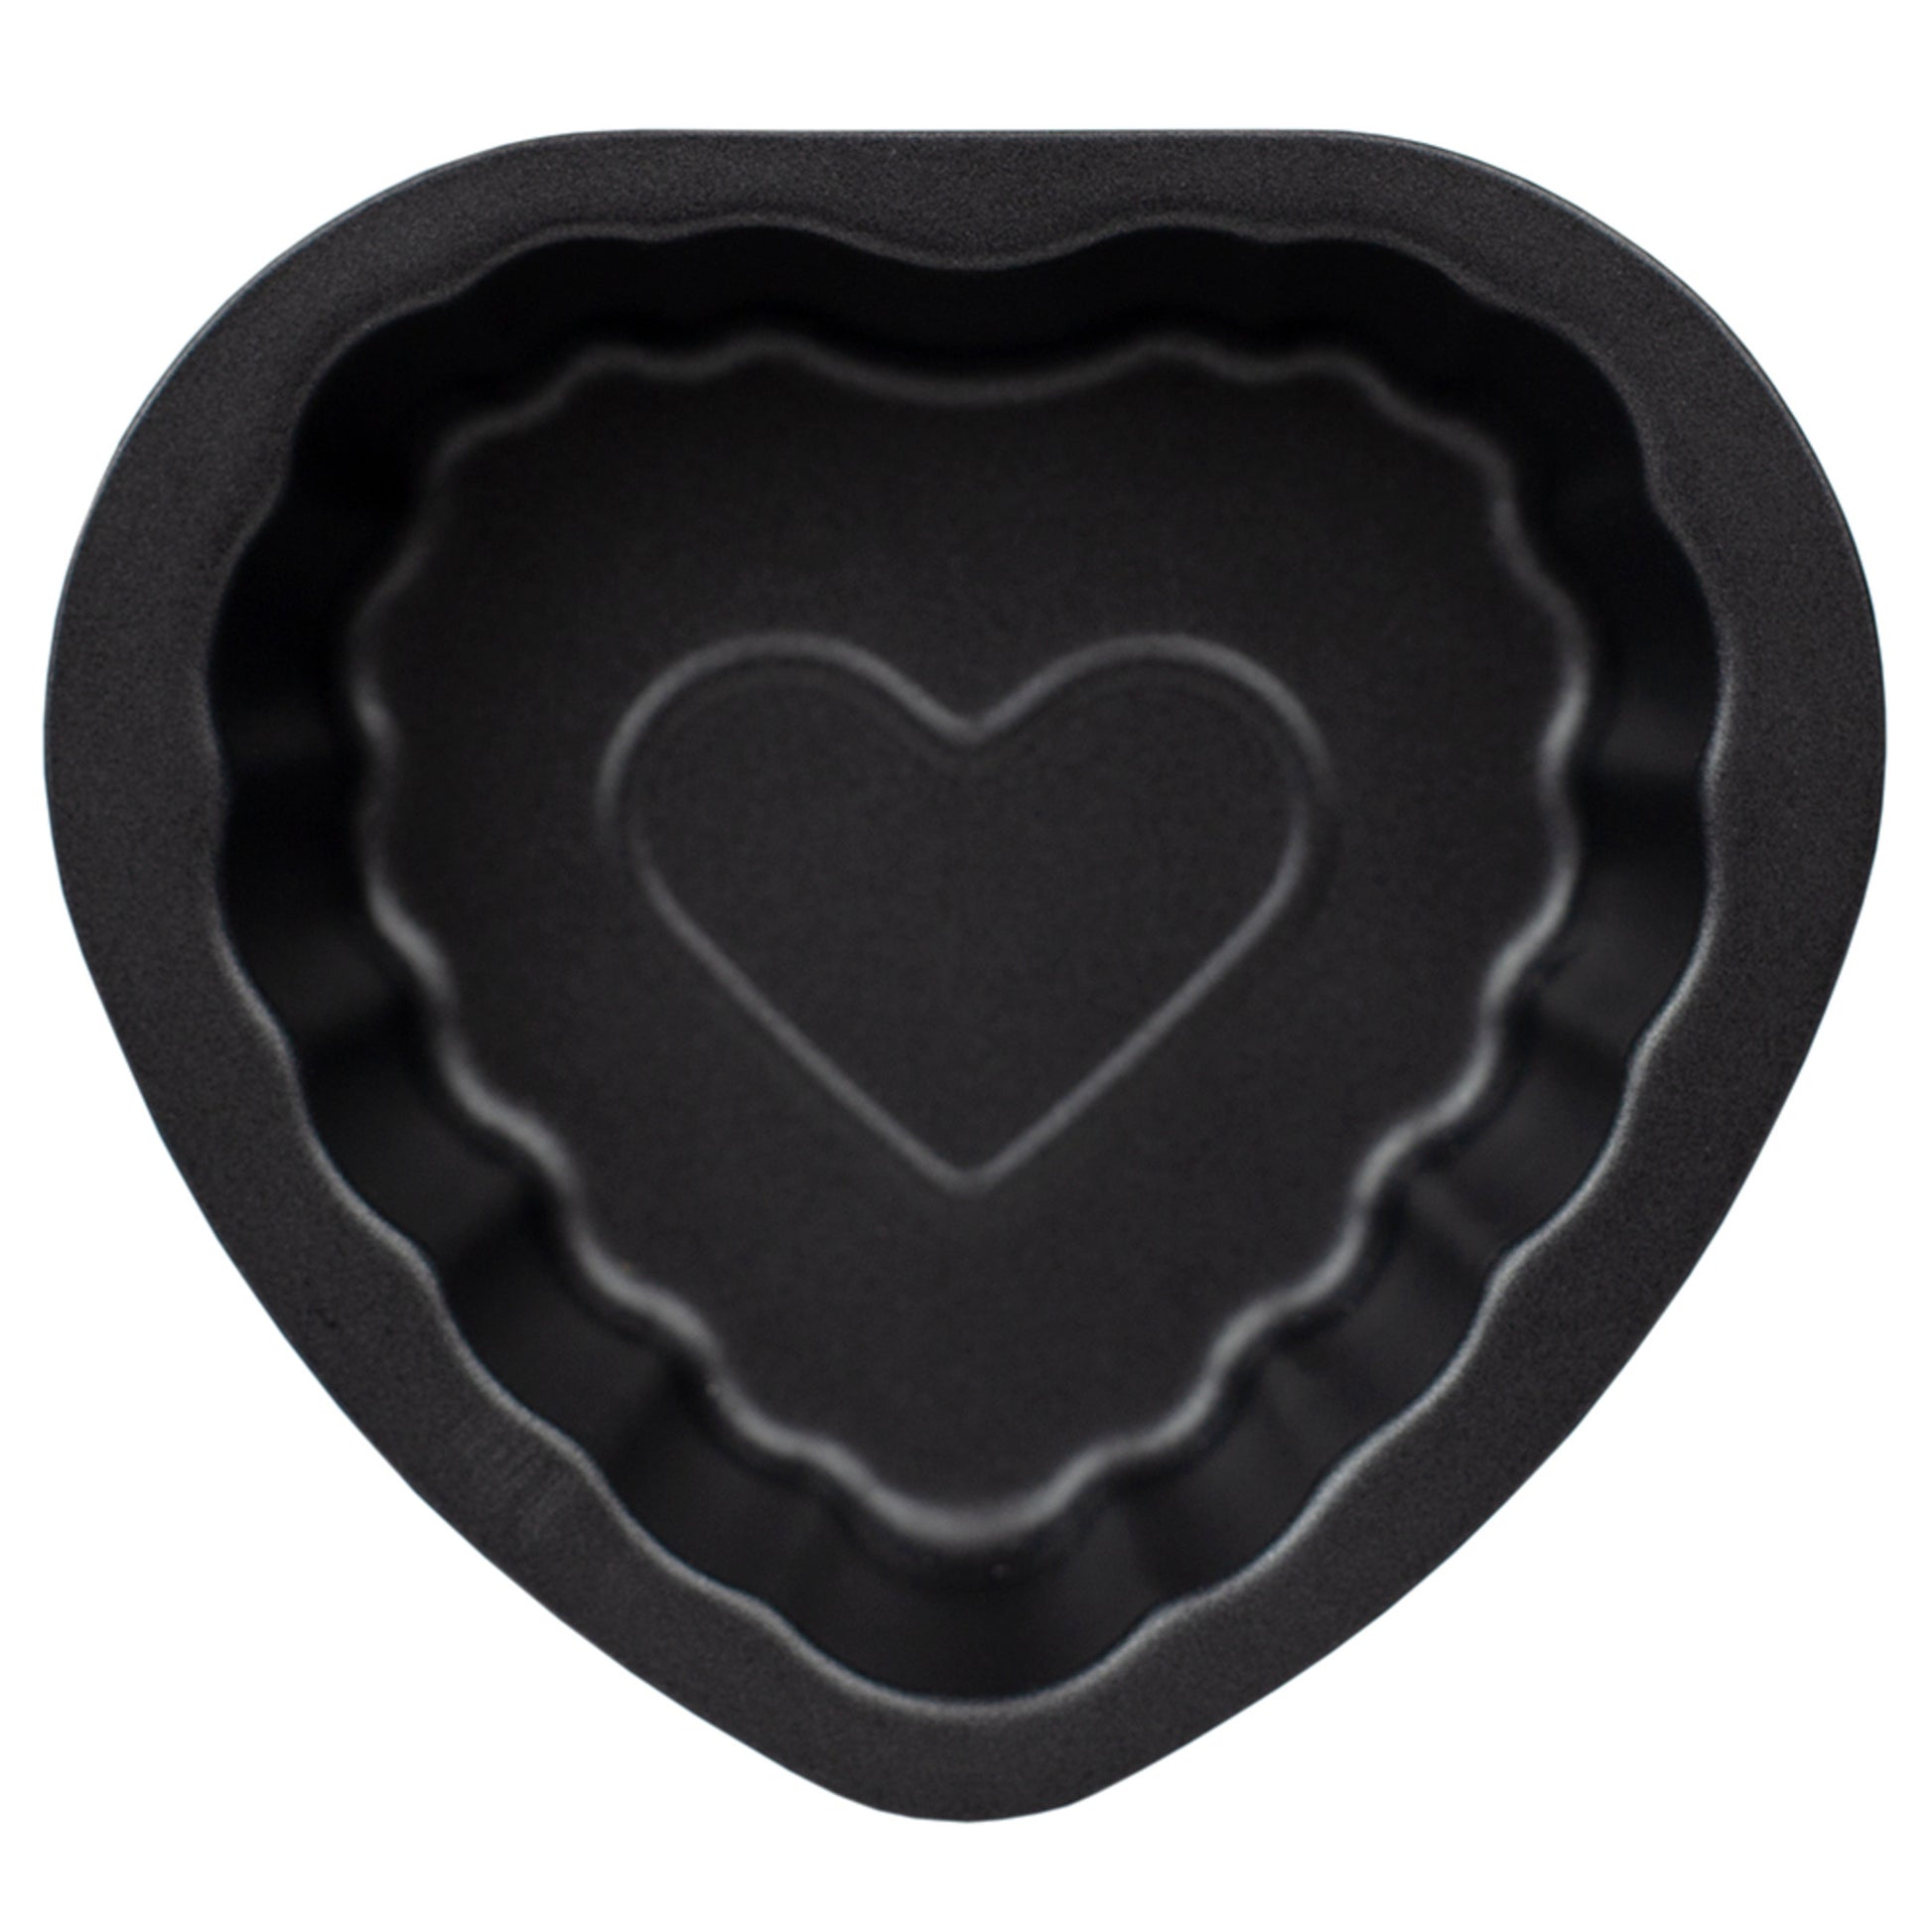 Home Basics Non-Stick Quick Release Steel Mini Bakeware Pan, Heart - Black